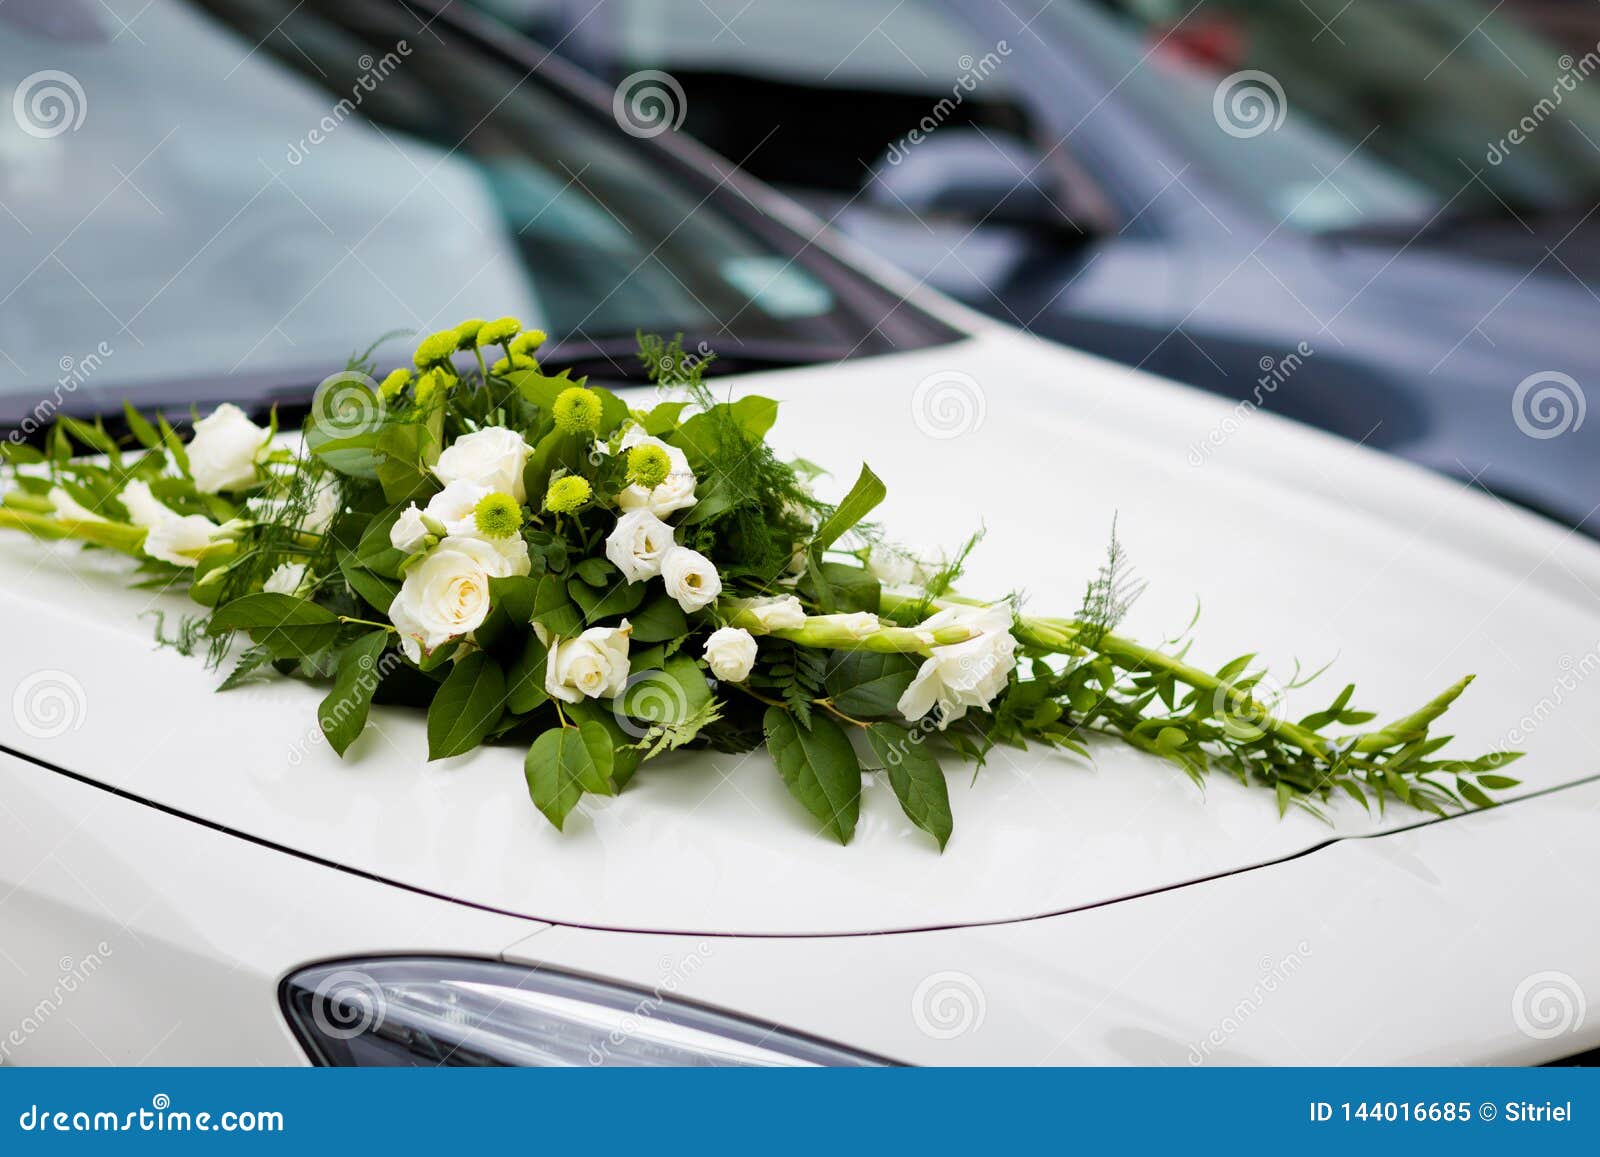 Beautiful Wedding Flowers Car Decoration Stock Image - Image of limousine,  flower: 144016685